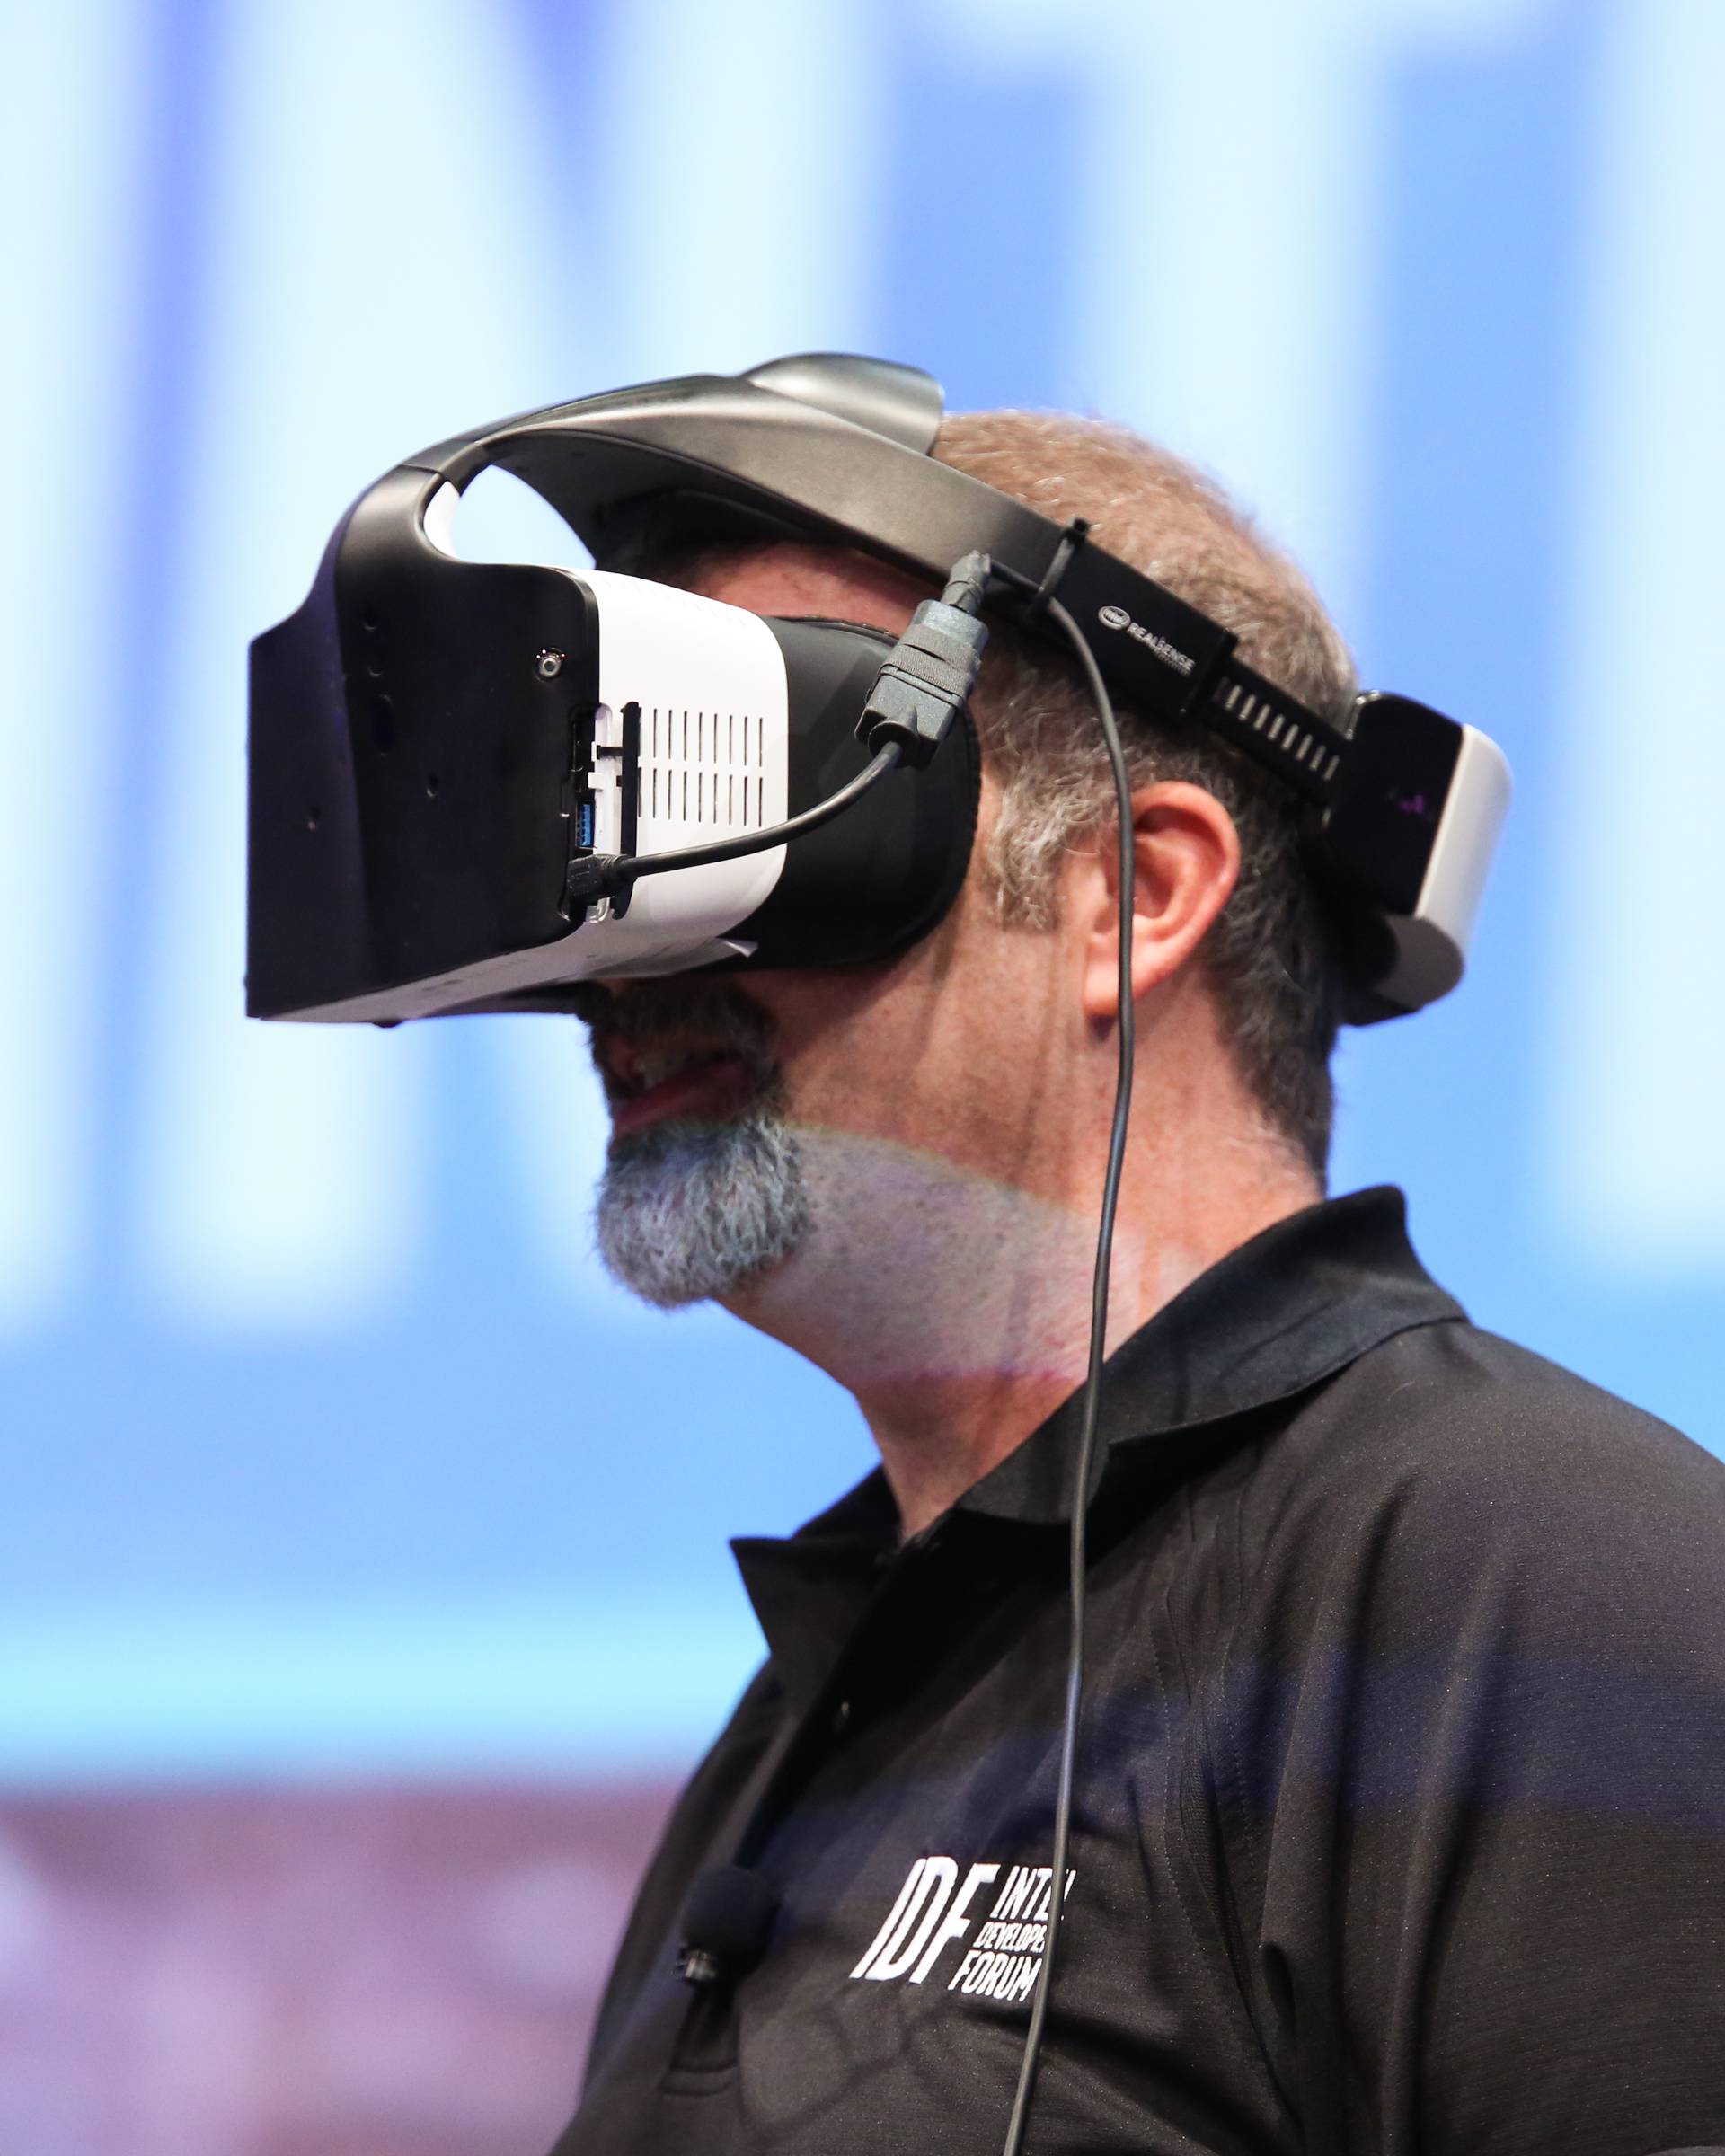 Ne treba ni žice: Intel pomiče granice virtualne stvarnosti